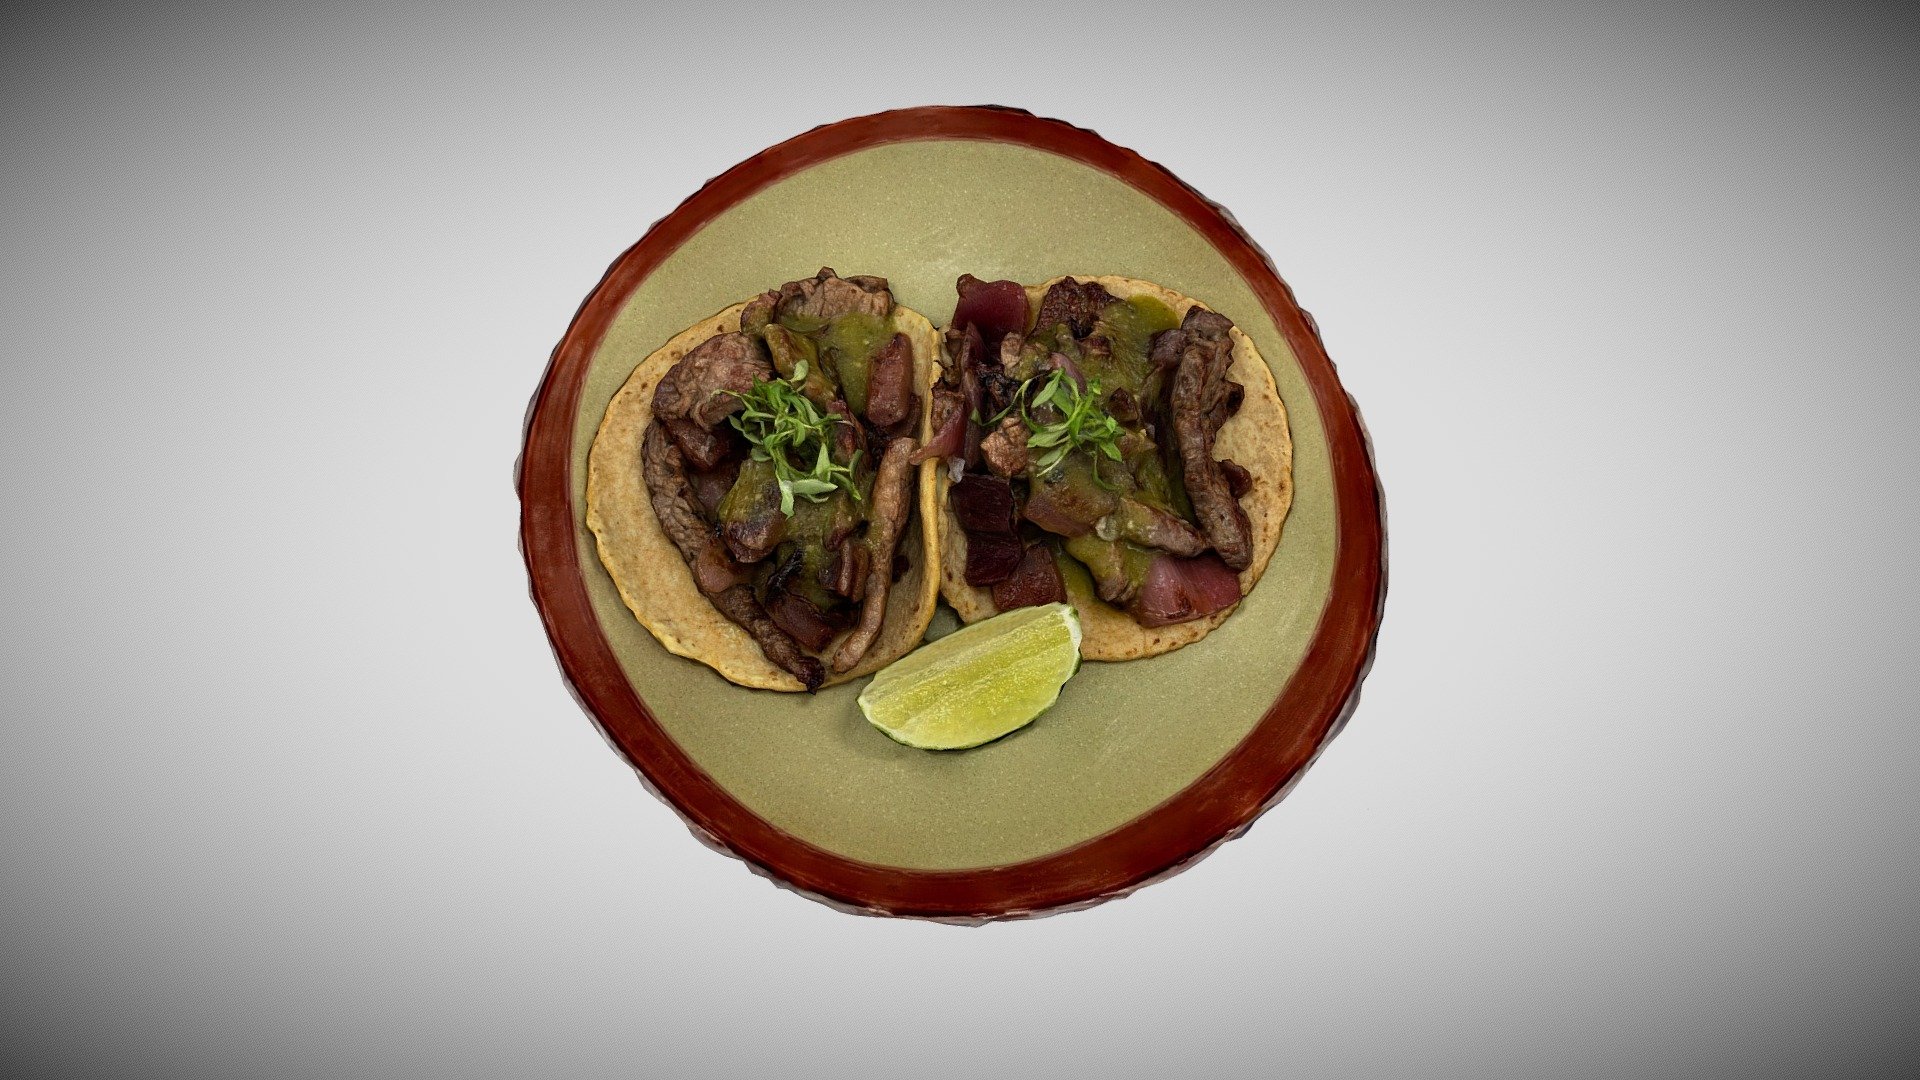 Carne Asada tacos from Sausalito restaurant named Copita Tequileria y Comida - Copita Carne Asada Tacos - Buy Royalty Free 3D model by Augmented Reality Marketing Solutions LLC (@AugRealMarketing) 3d model